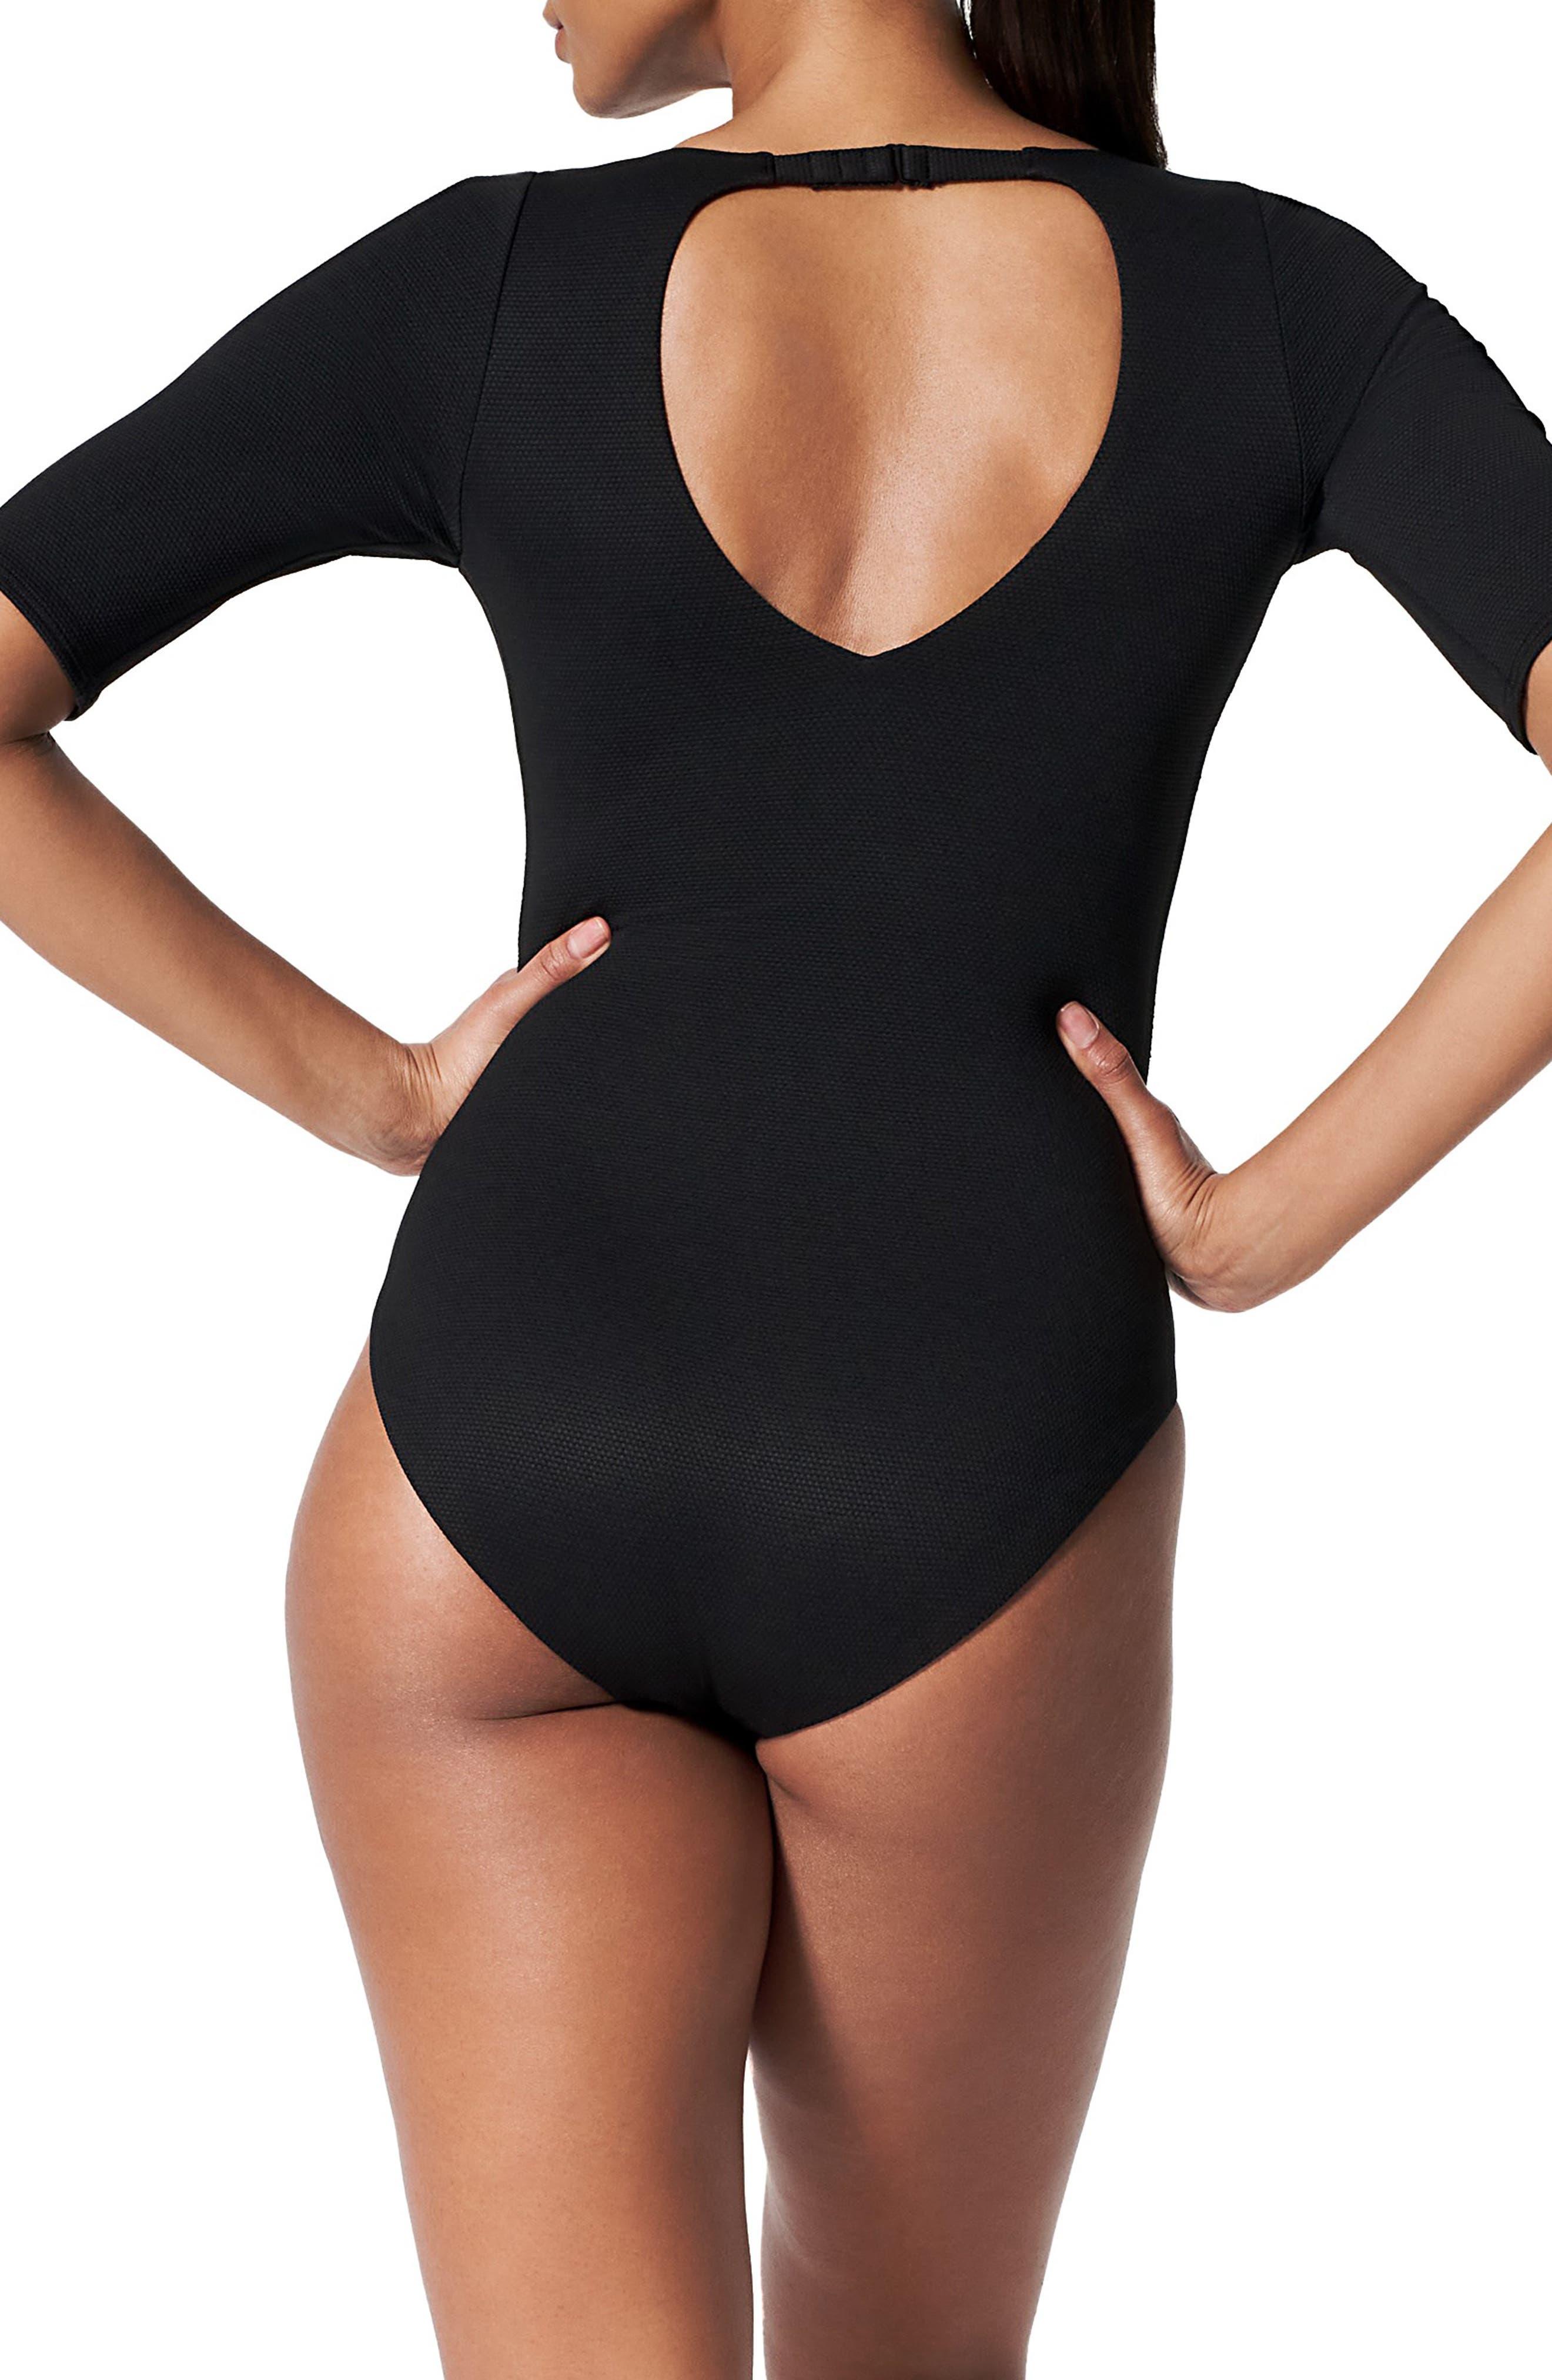 https://cdna.lystit.com/photos/nordstrom/0e39f652/spanx-Very-Black-Spanx-Pique-Shaping-Short-Sleeve-One-piece-Rashguard-Swimsuit.jpeg